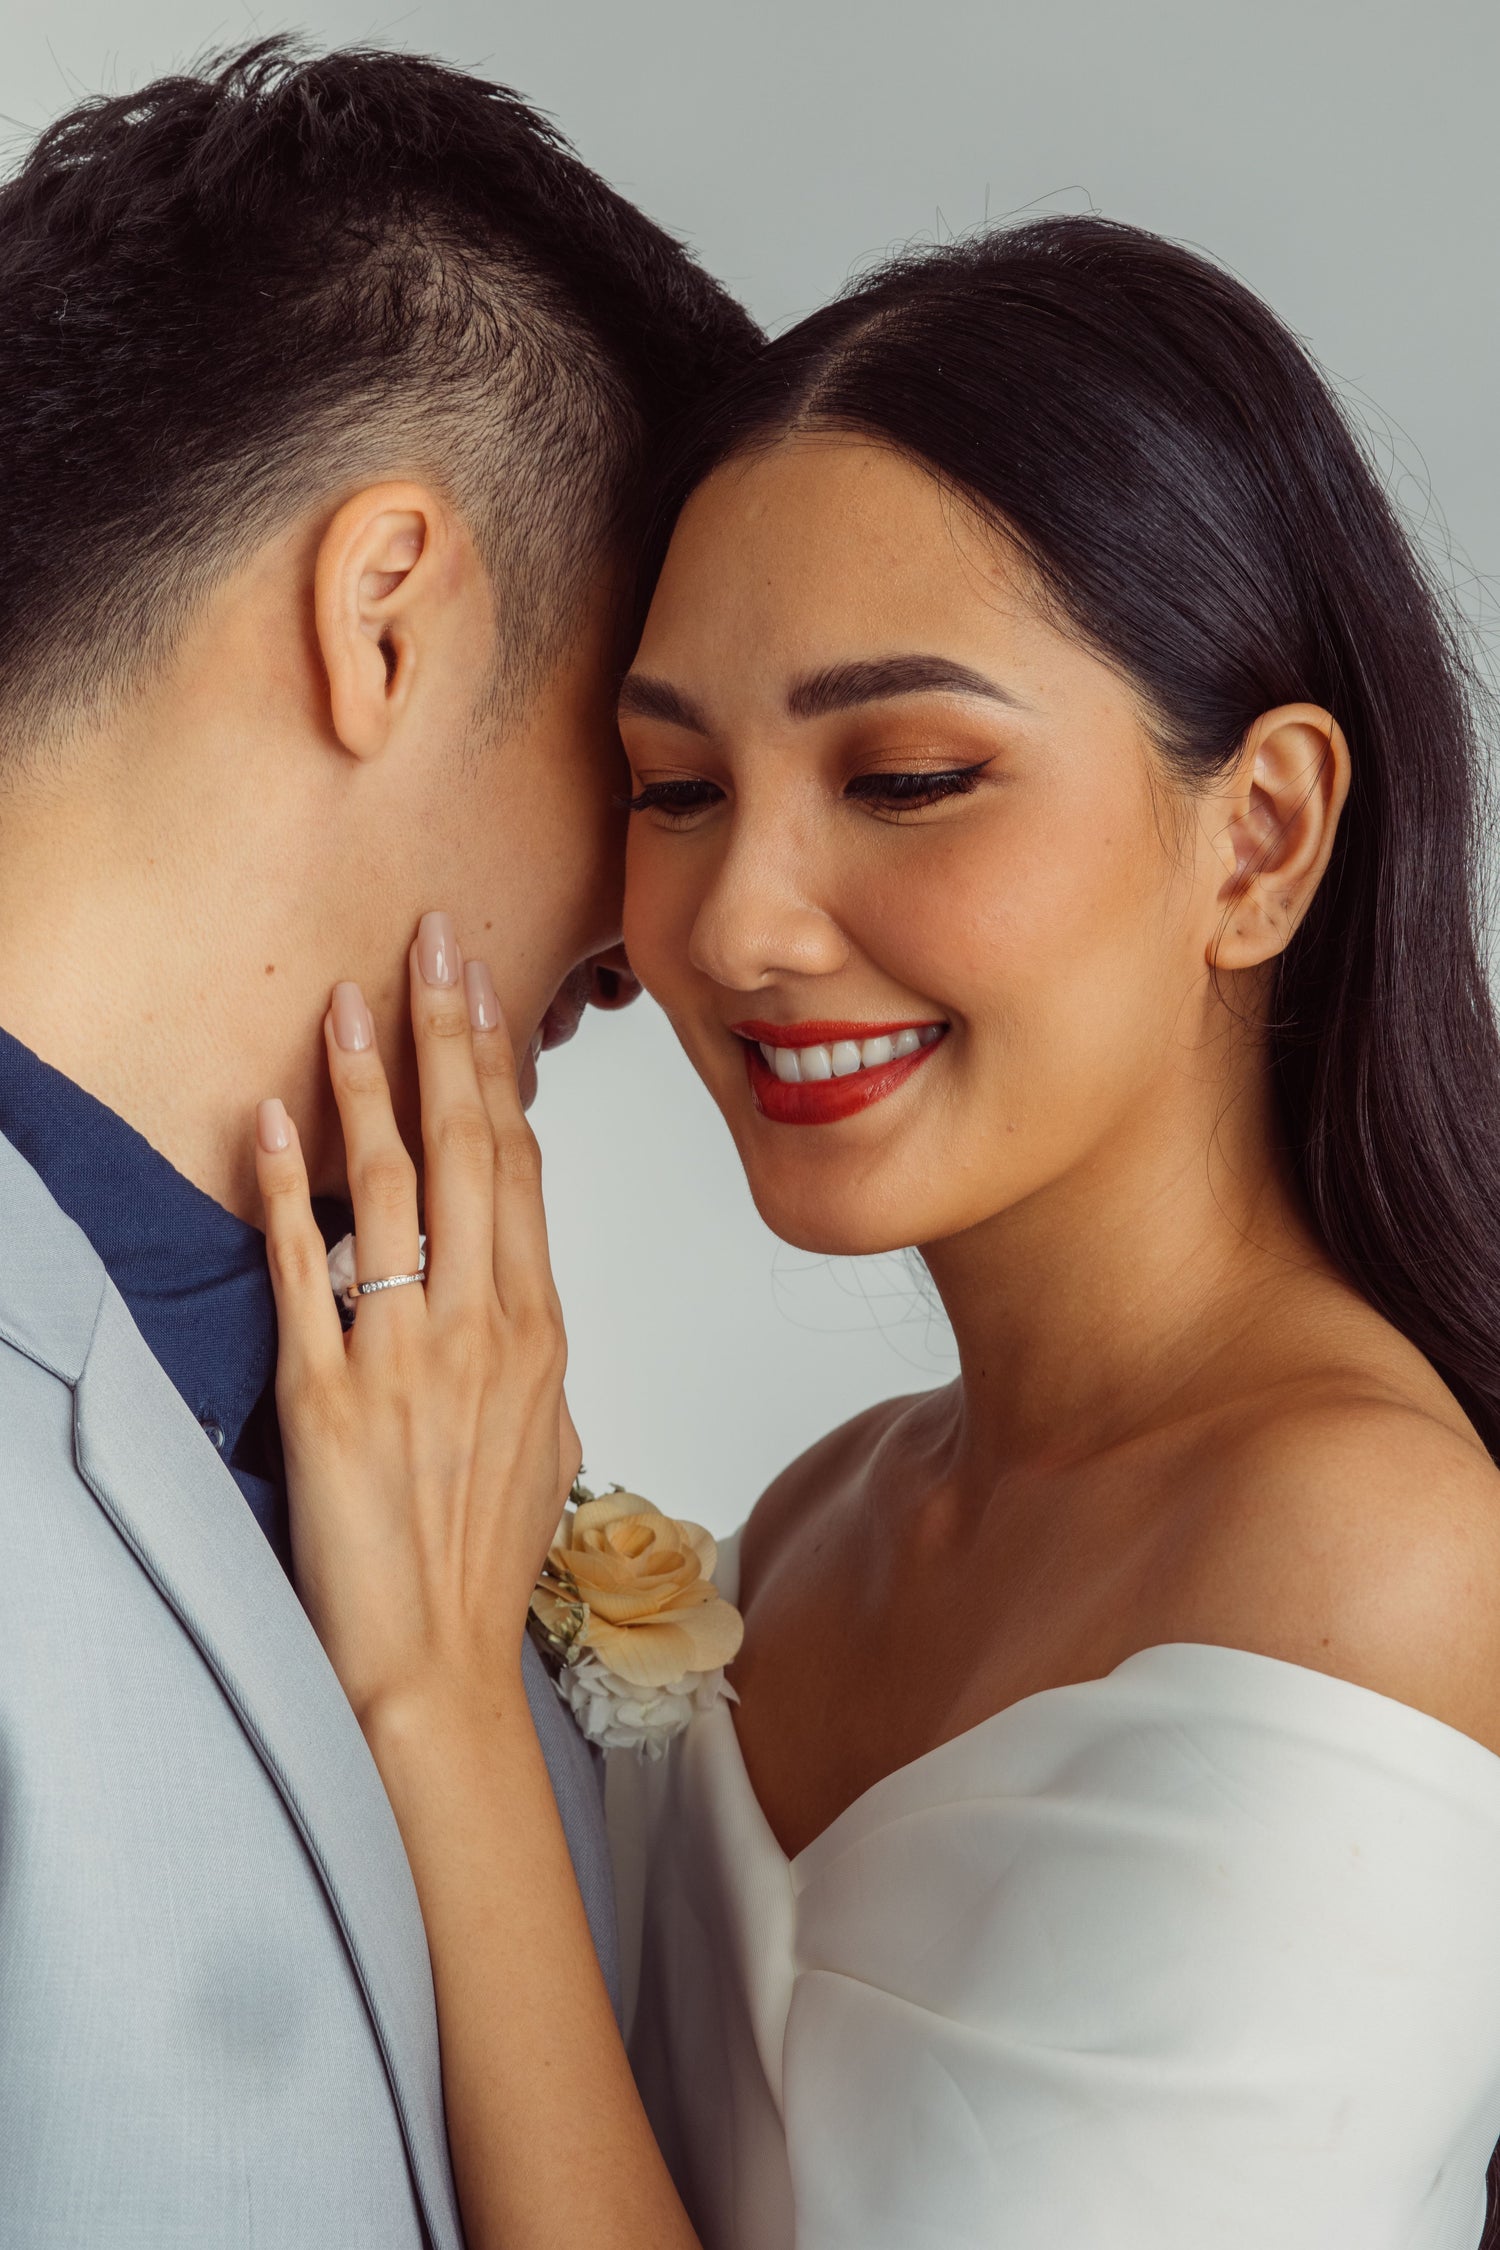 Wedding Rings Philippines, Diamond Jewelry, Proposal Rings